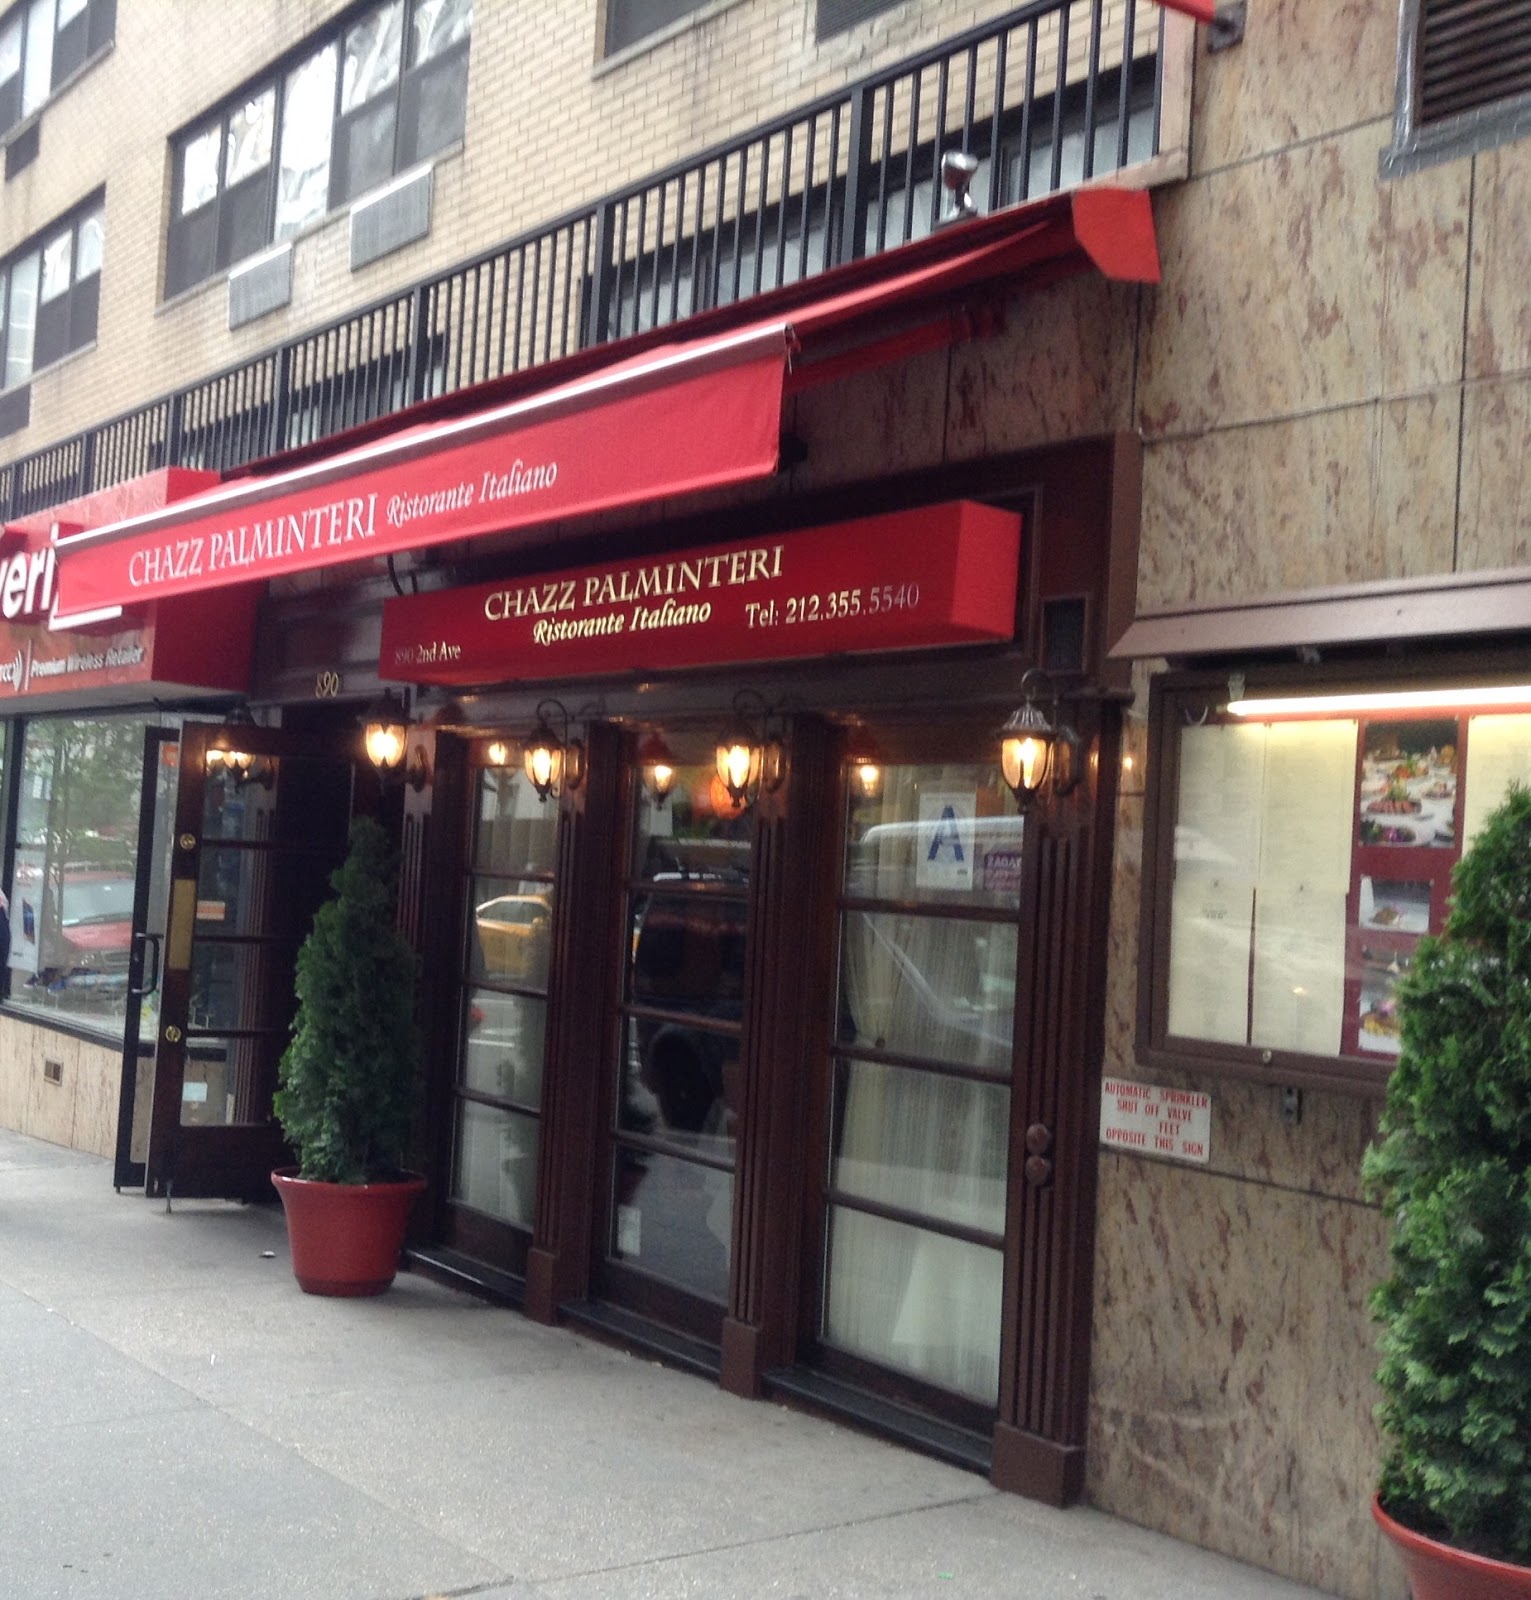 Photo of Chazz Palminteri Ristorante Italiano in New York City, New York, United States - 1 Picture of Restaurant, Food, Point of interest, Establishment